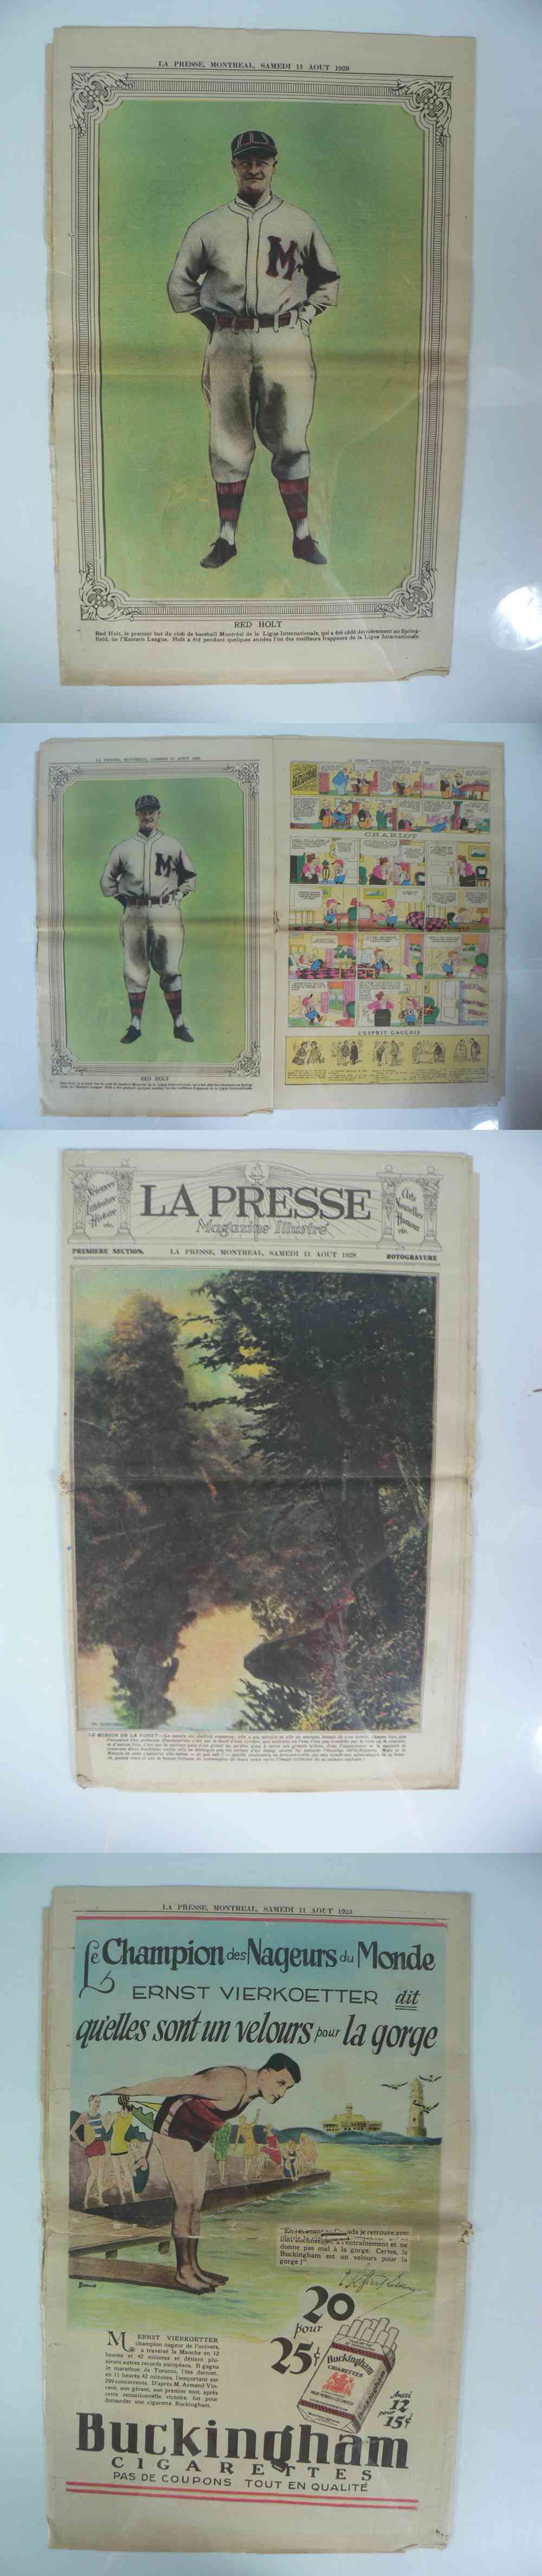 1928 LA PRESSE FULL NEWSPAPER INSIDE PHOTO R. HOLT photo